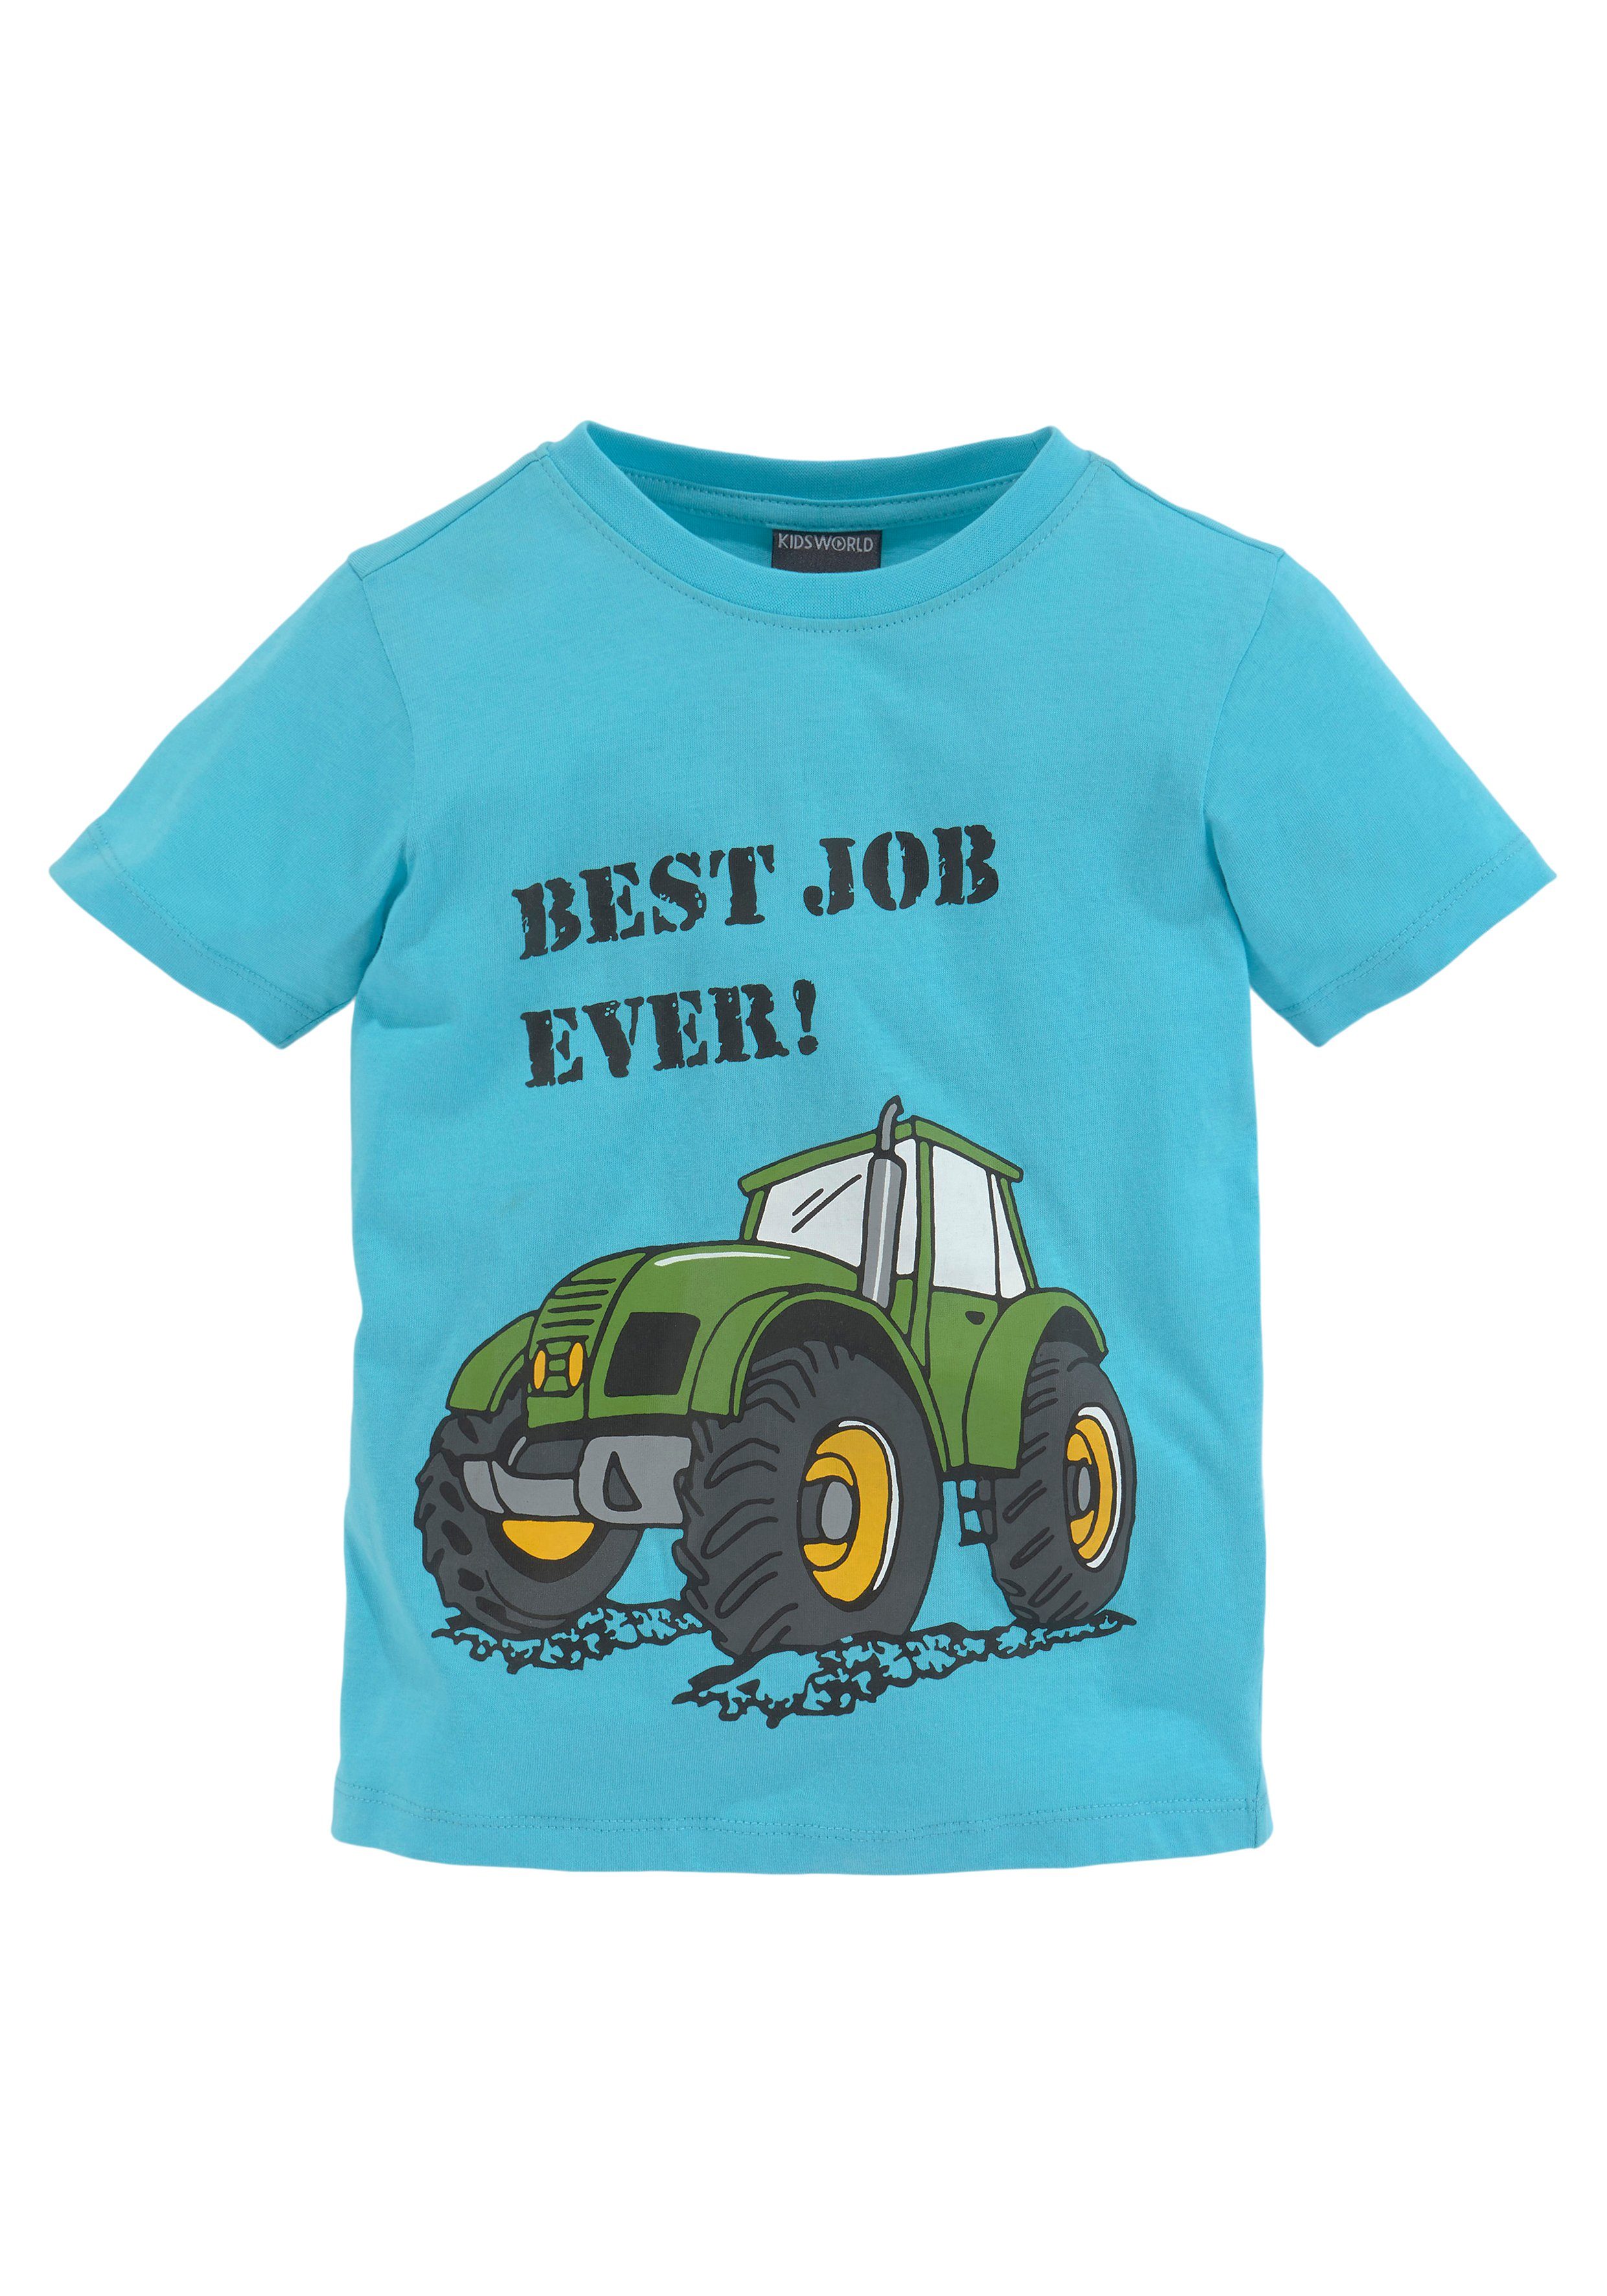 2er-Pack) KIDSWORLD BEST JOB T-Shirt EVER! (Packung,